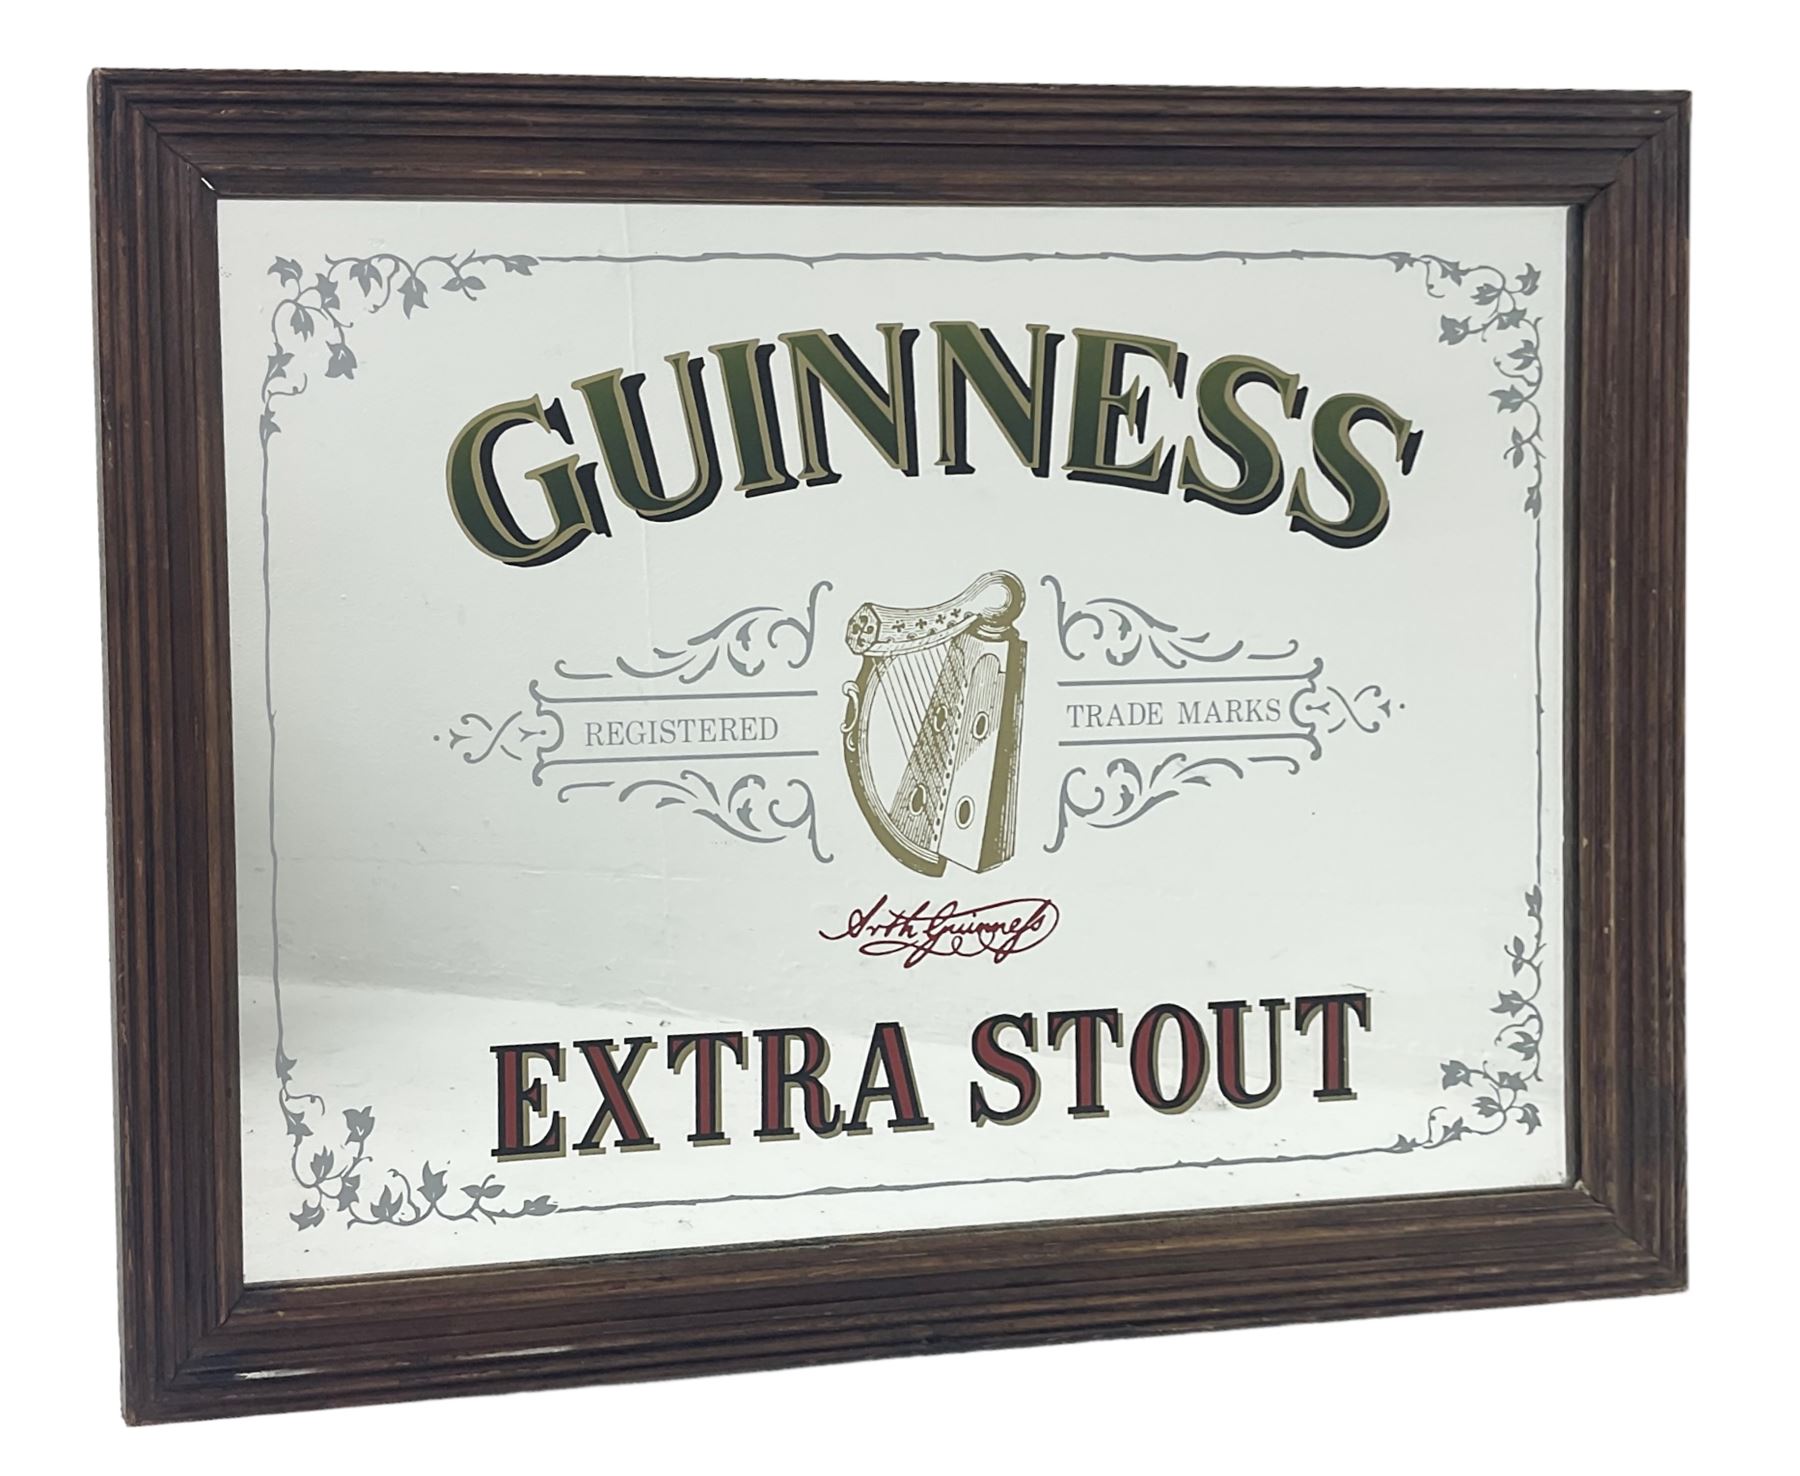 Guinness advertising mirror